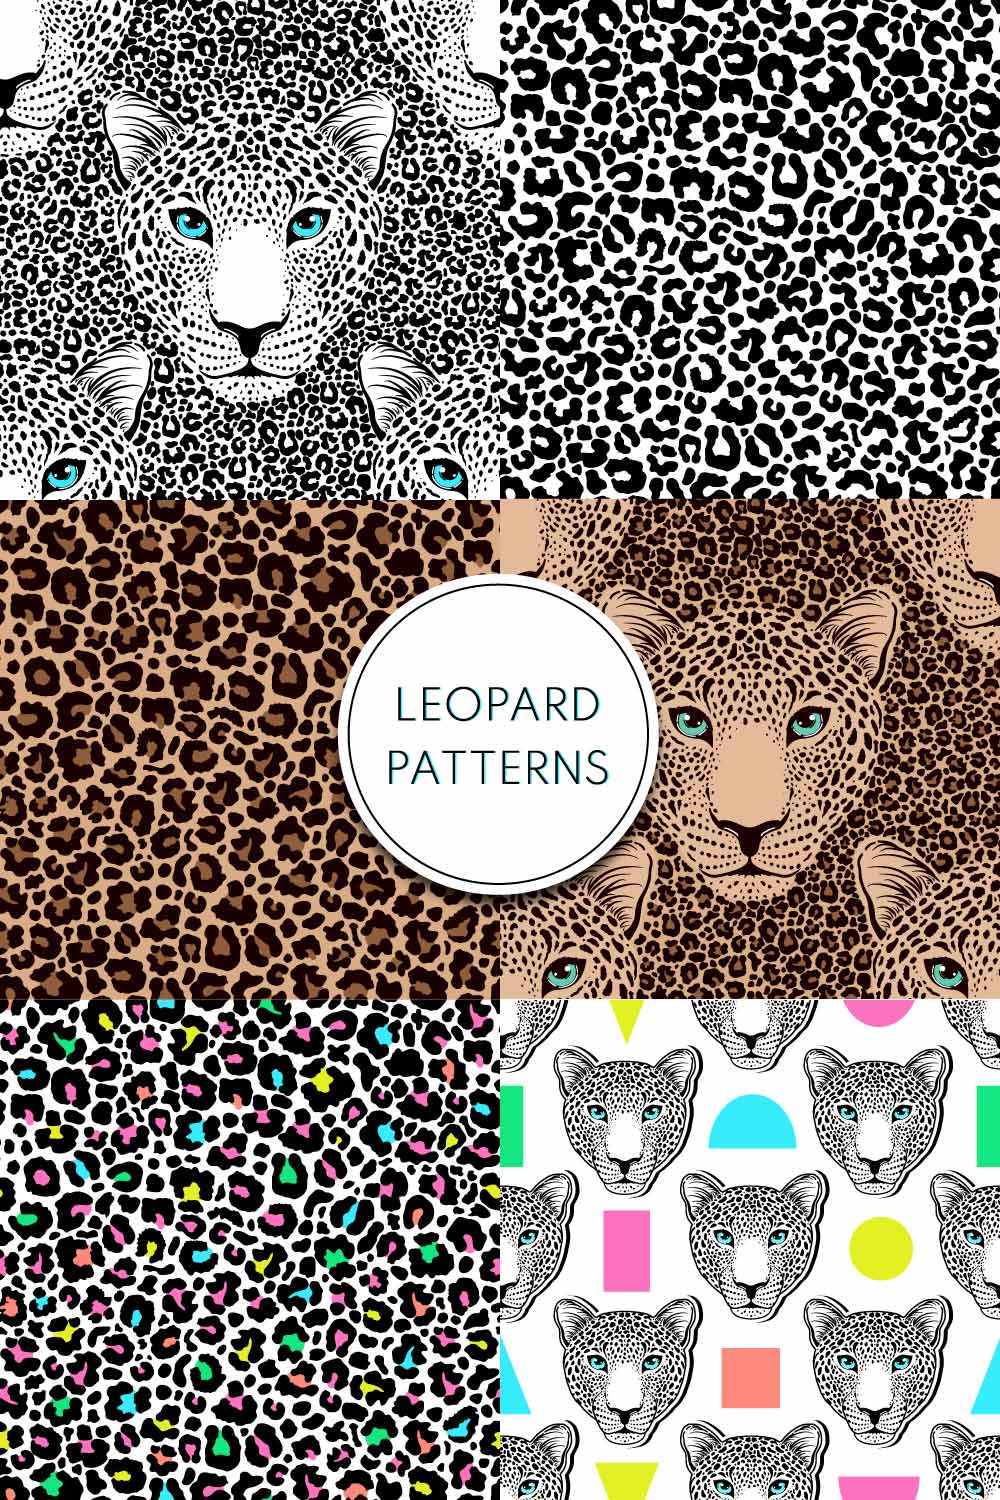 Leopard patterns pinterest preview image.